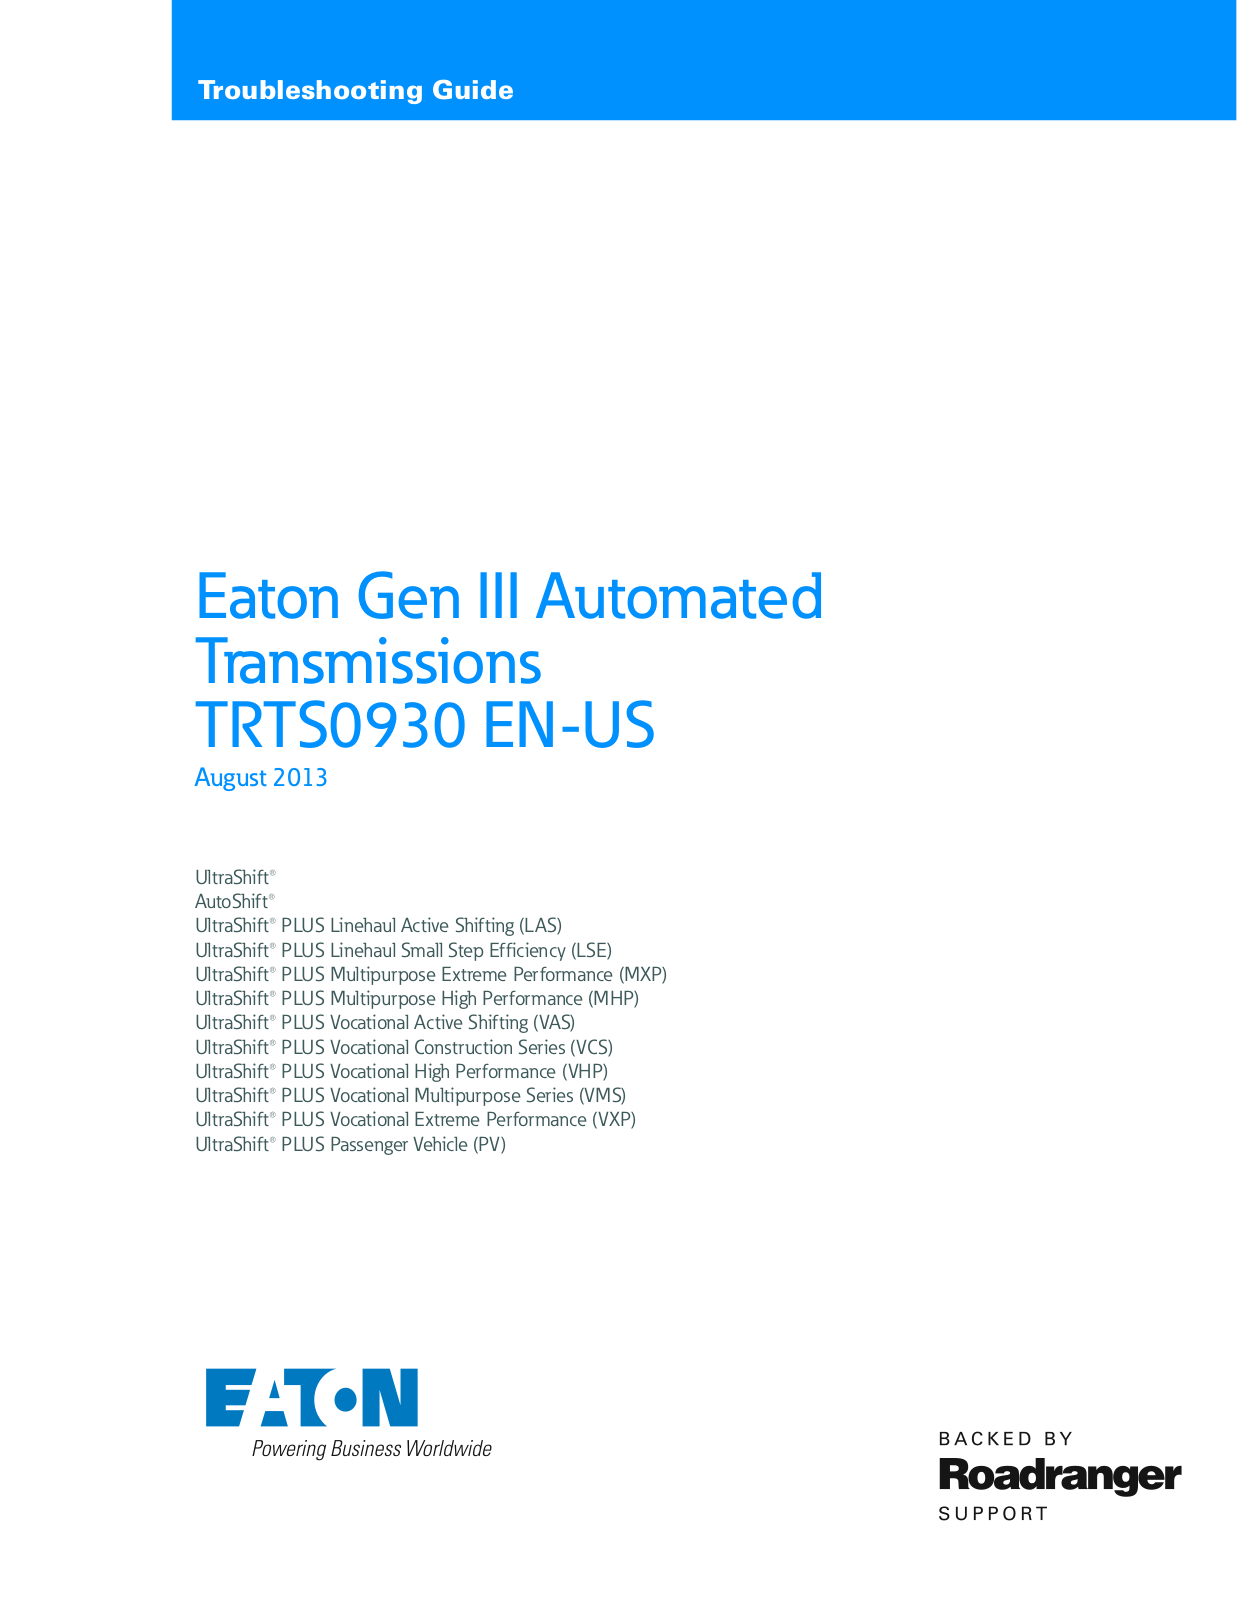 Eaton Transmission F-5405B-DM3 Service Manual